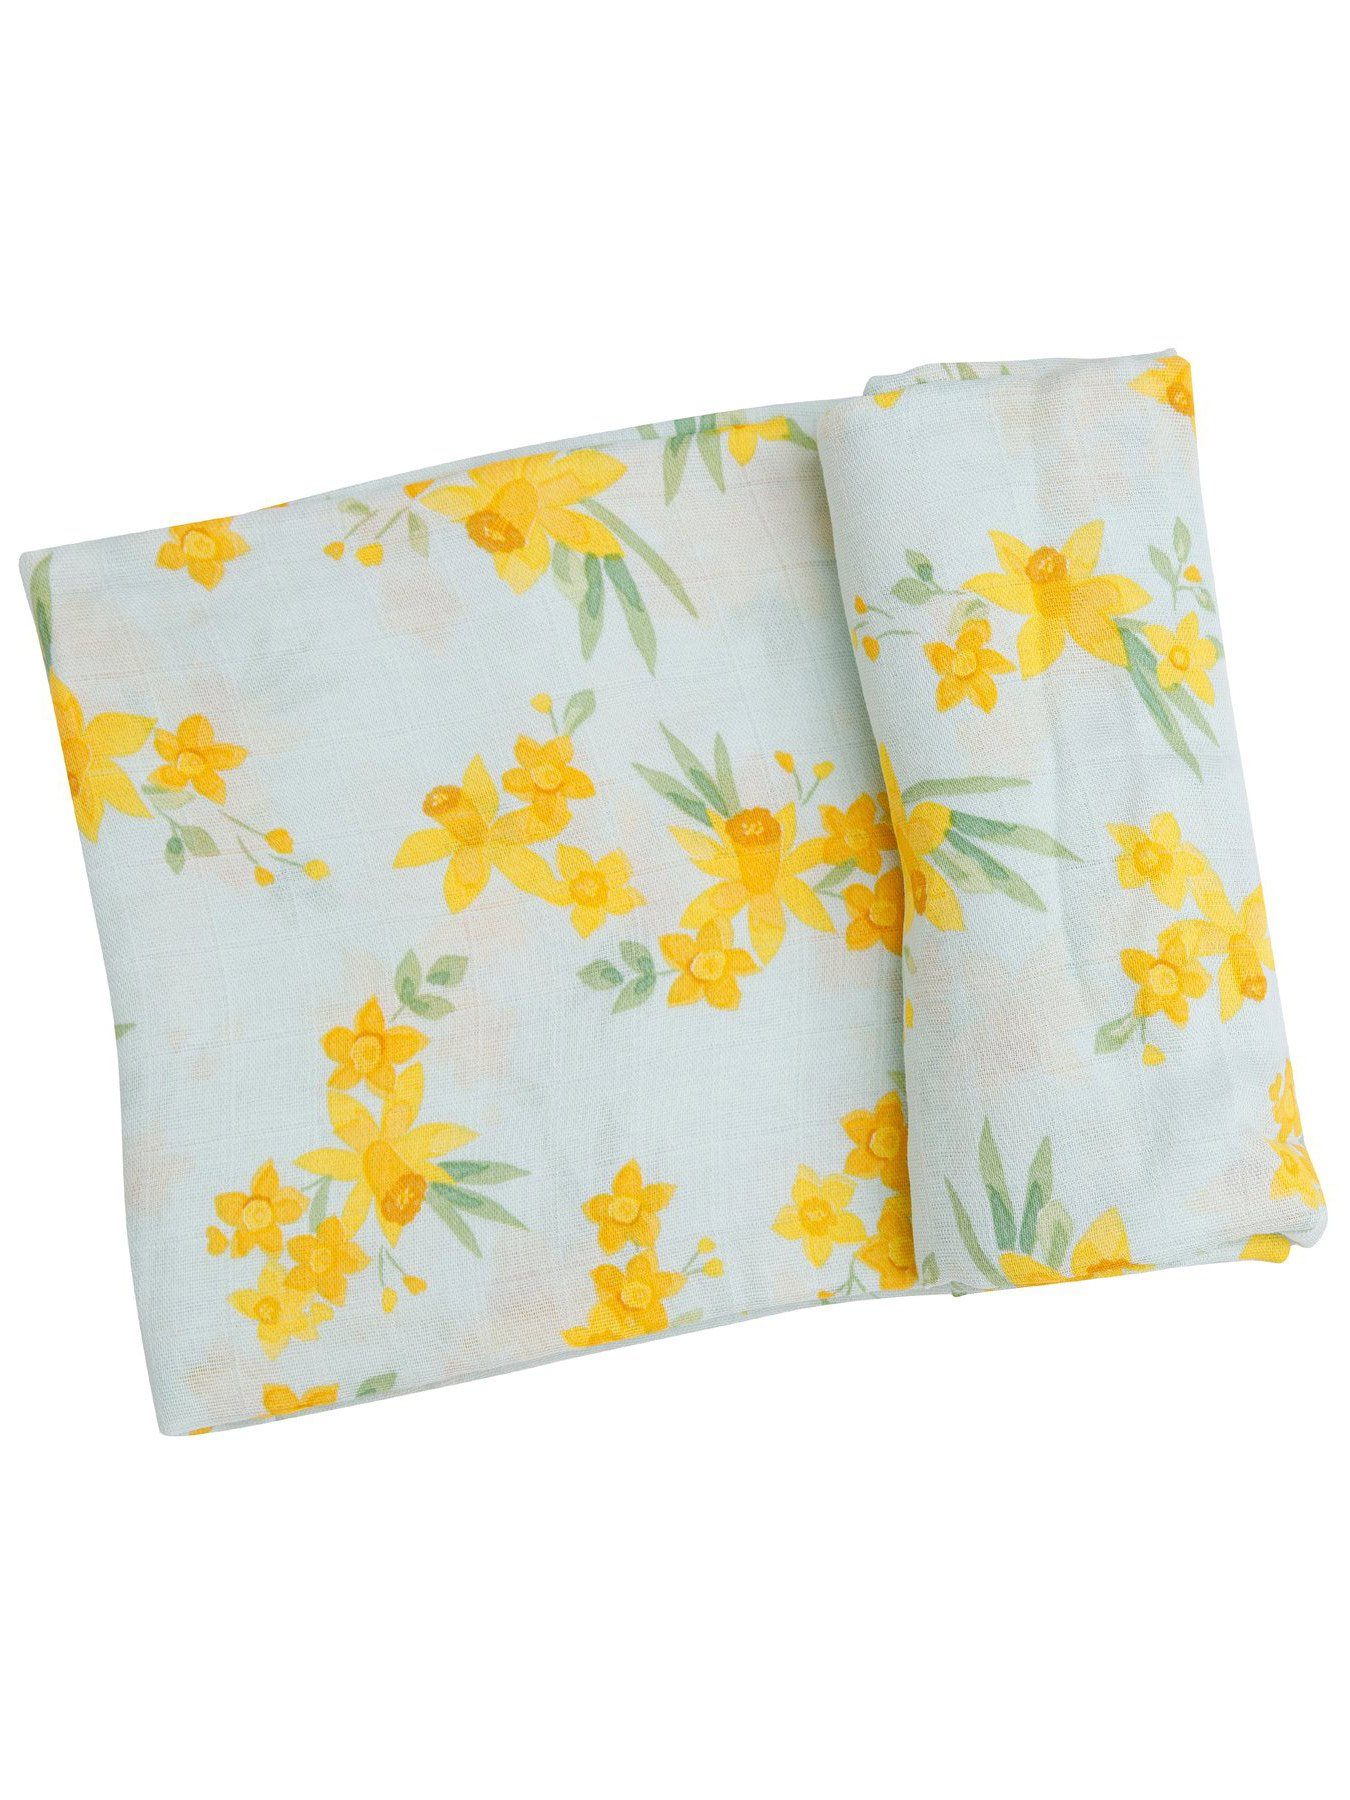 Green Daffodil Print Cotton Muslin Swaddle - Swaddle Blanket - Angel Dear